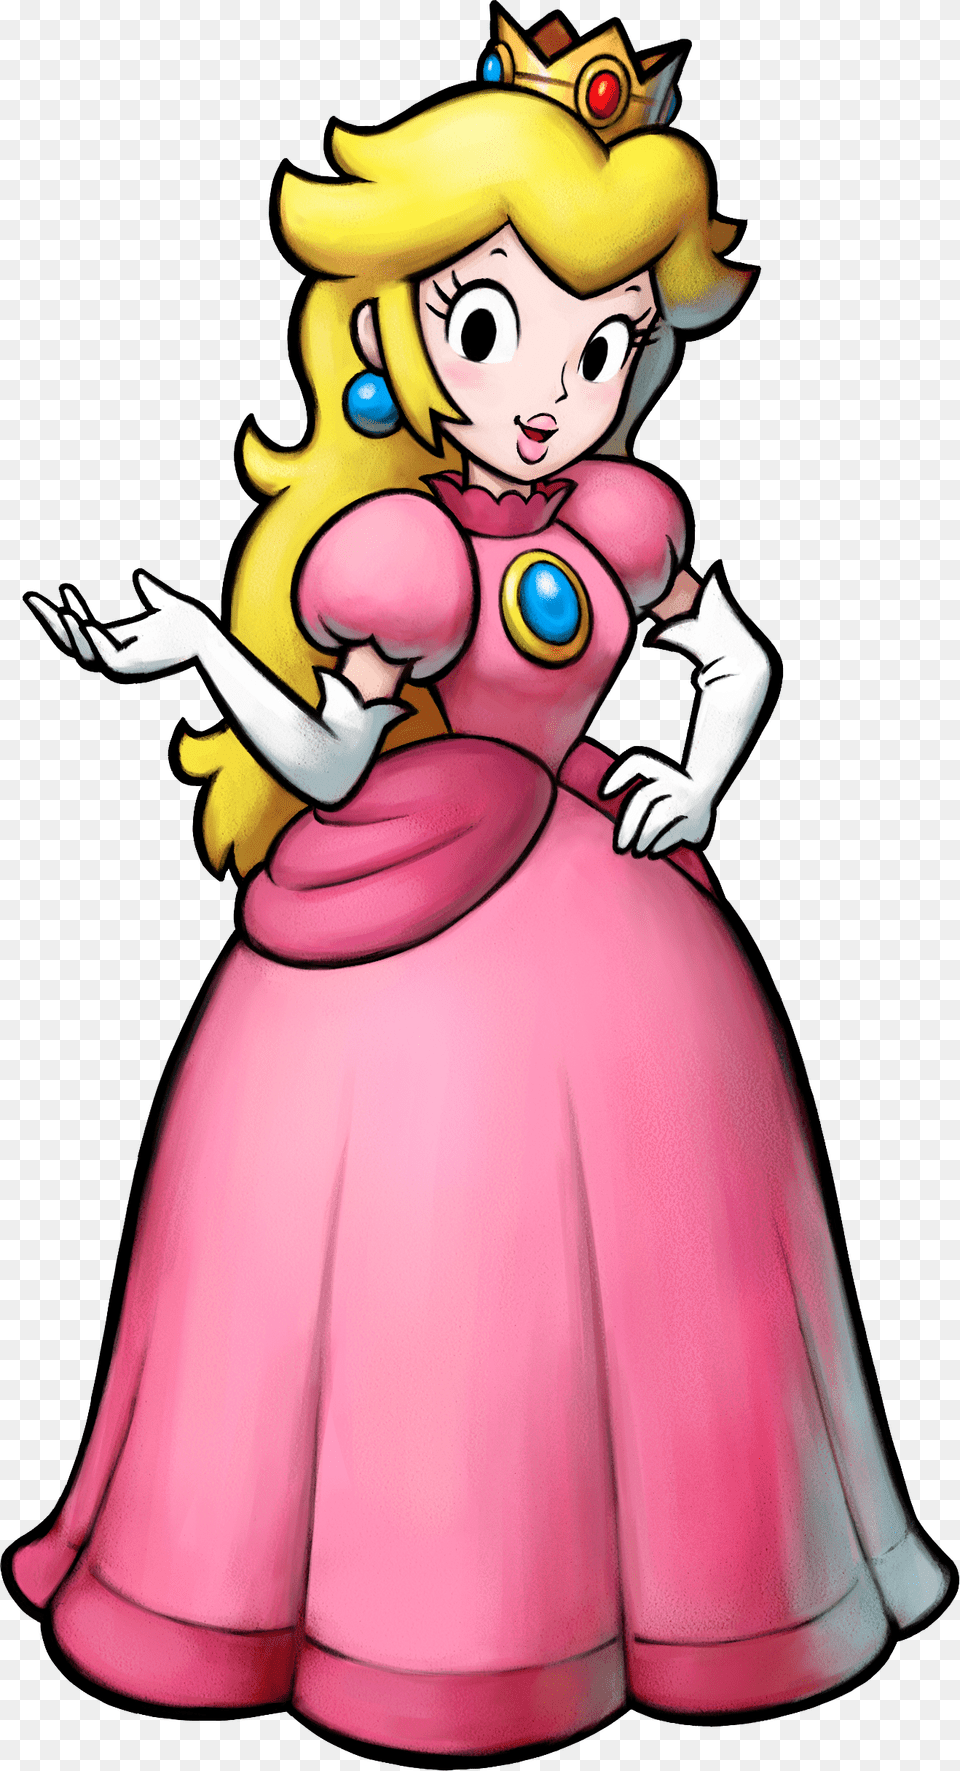 Mario Princess Peach Mario Bros Princesa Peach, Person, Cartoon, Face, Head Png Image